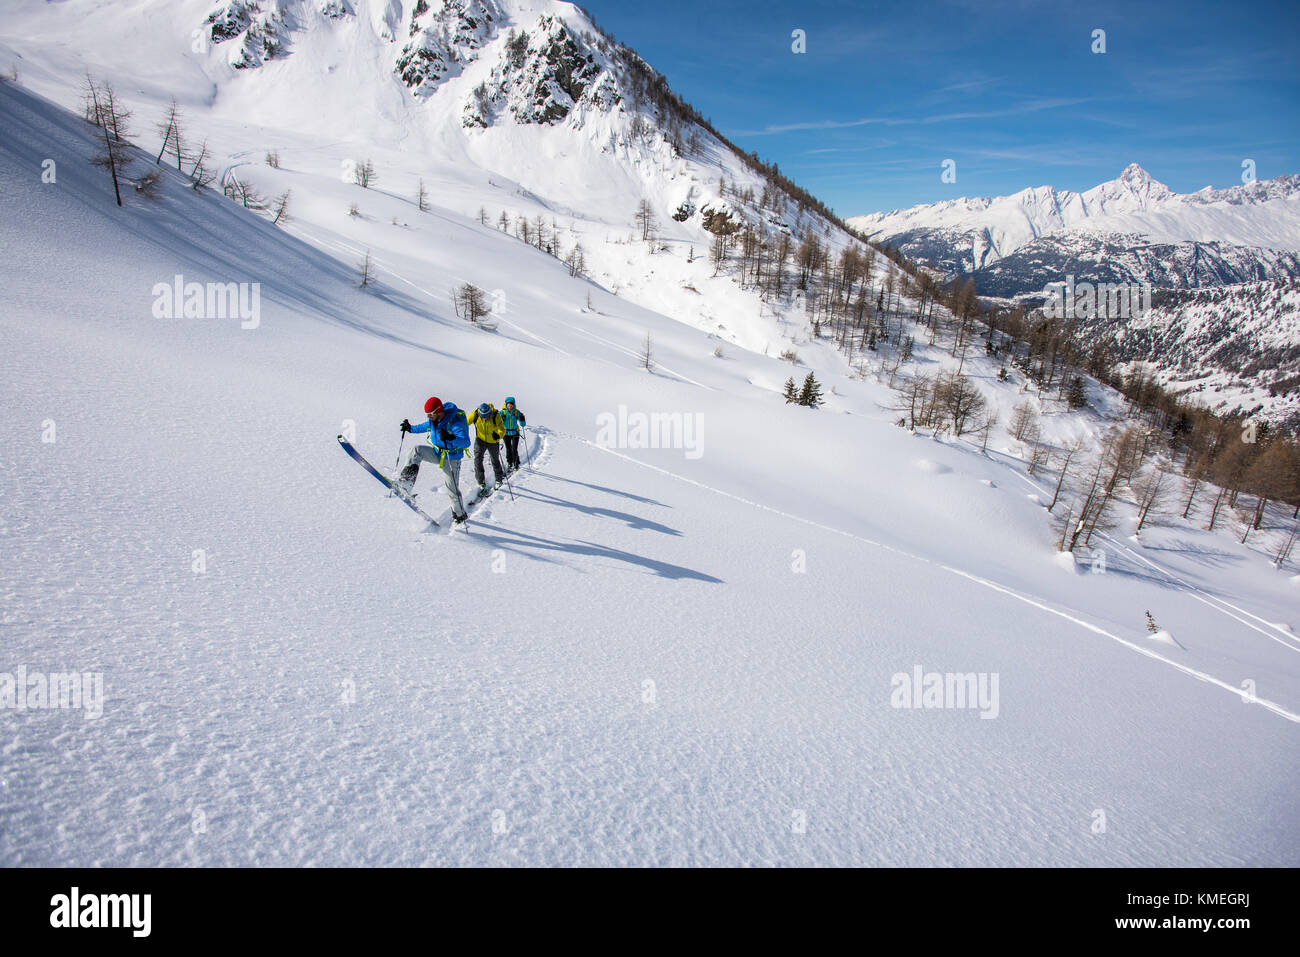 Ski touring on a powder day in Simplonpass, Switzerland. Stock Photo